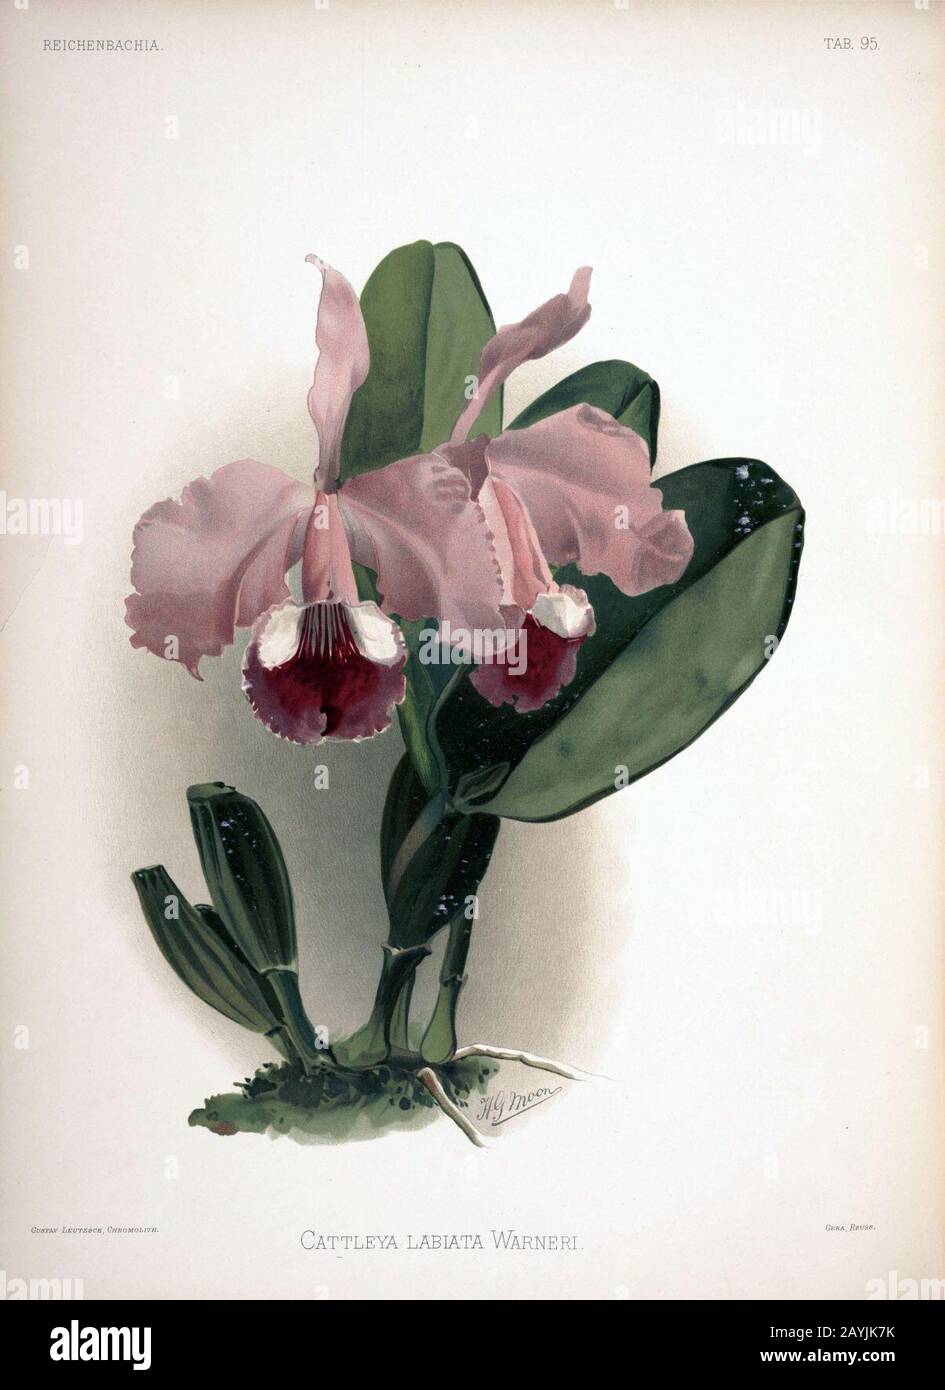 Frederick Sander - Reichenbachia II plate 95 (1890) - Cattleya labiata warneri. Stock Photo